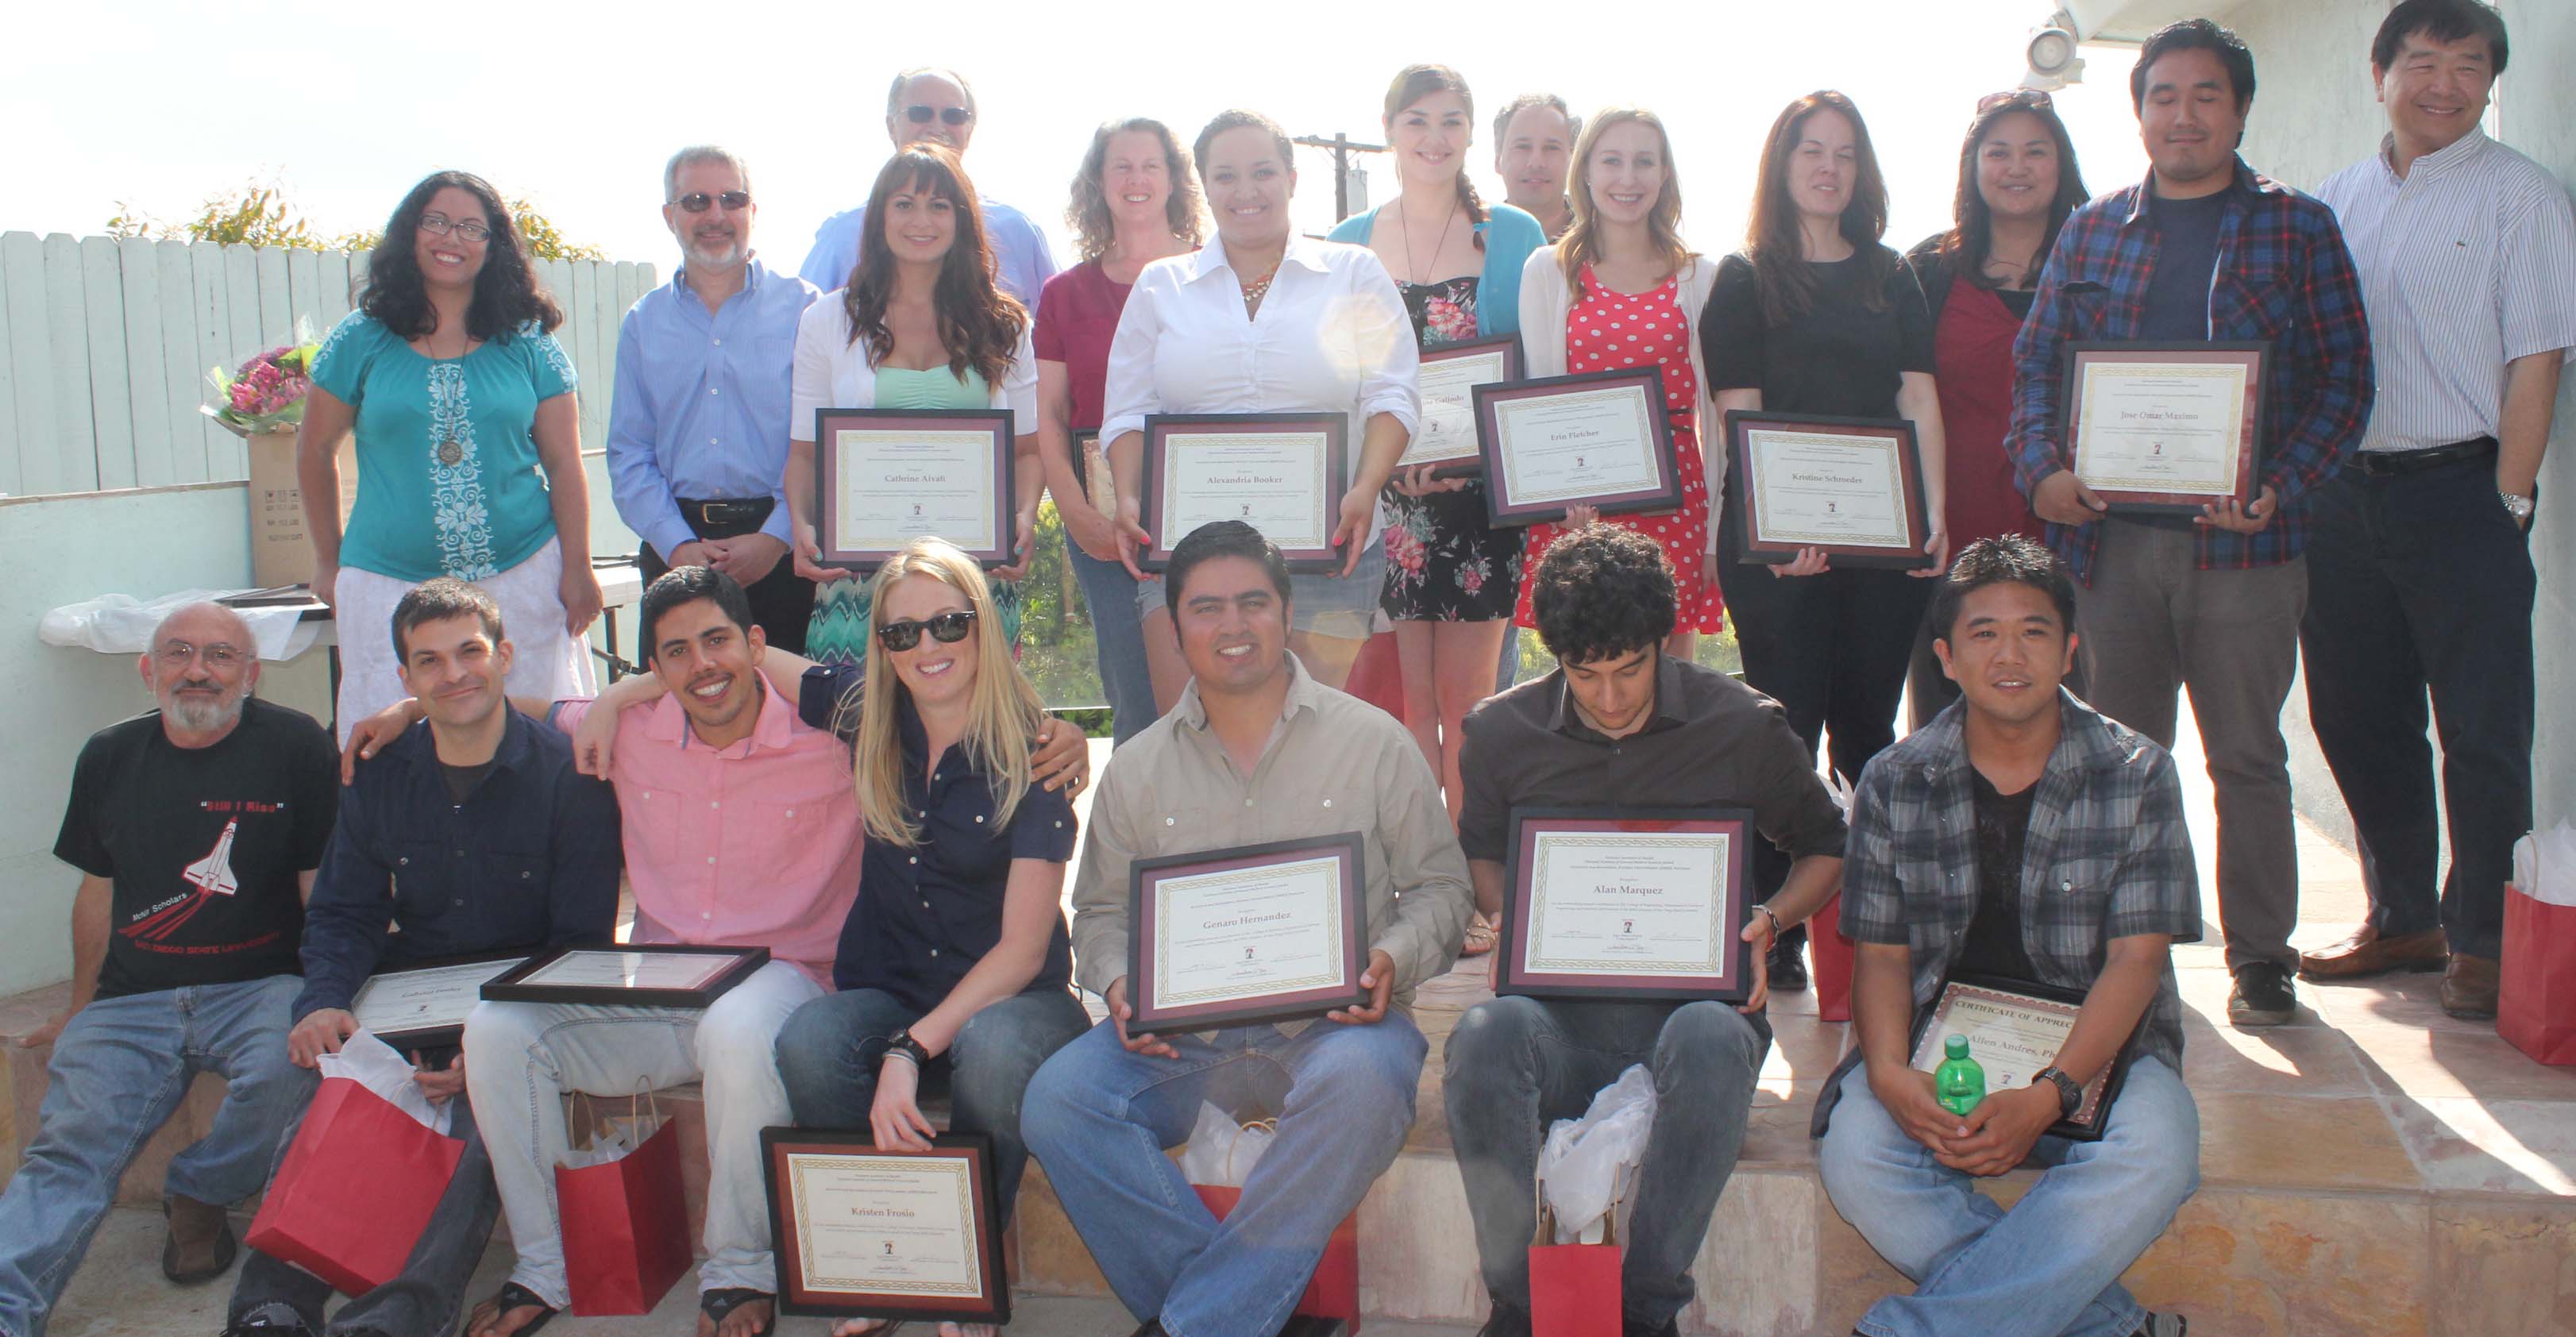 Congratulations to our 2013 IMSD Graduates